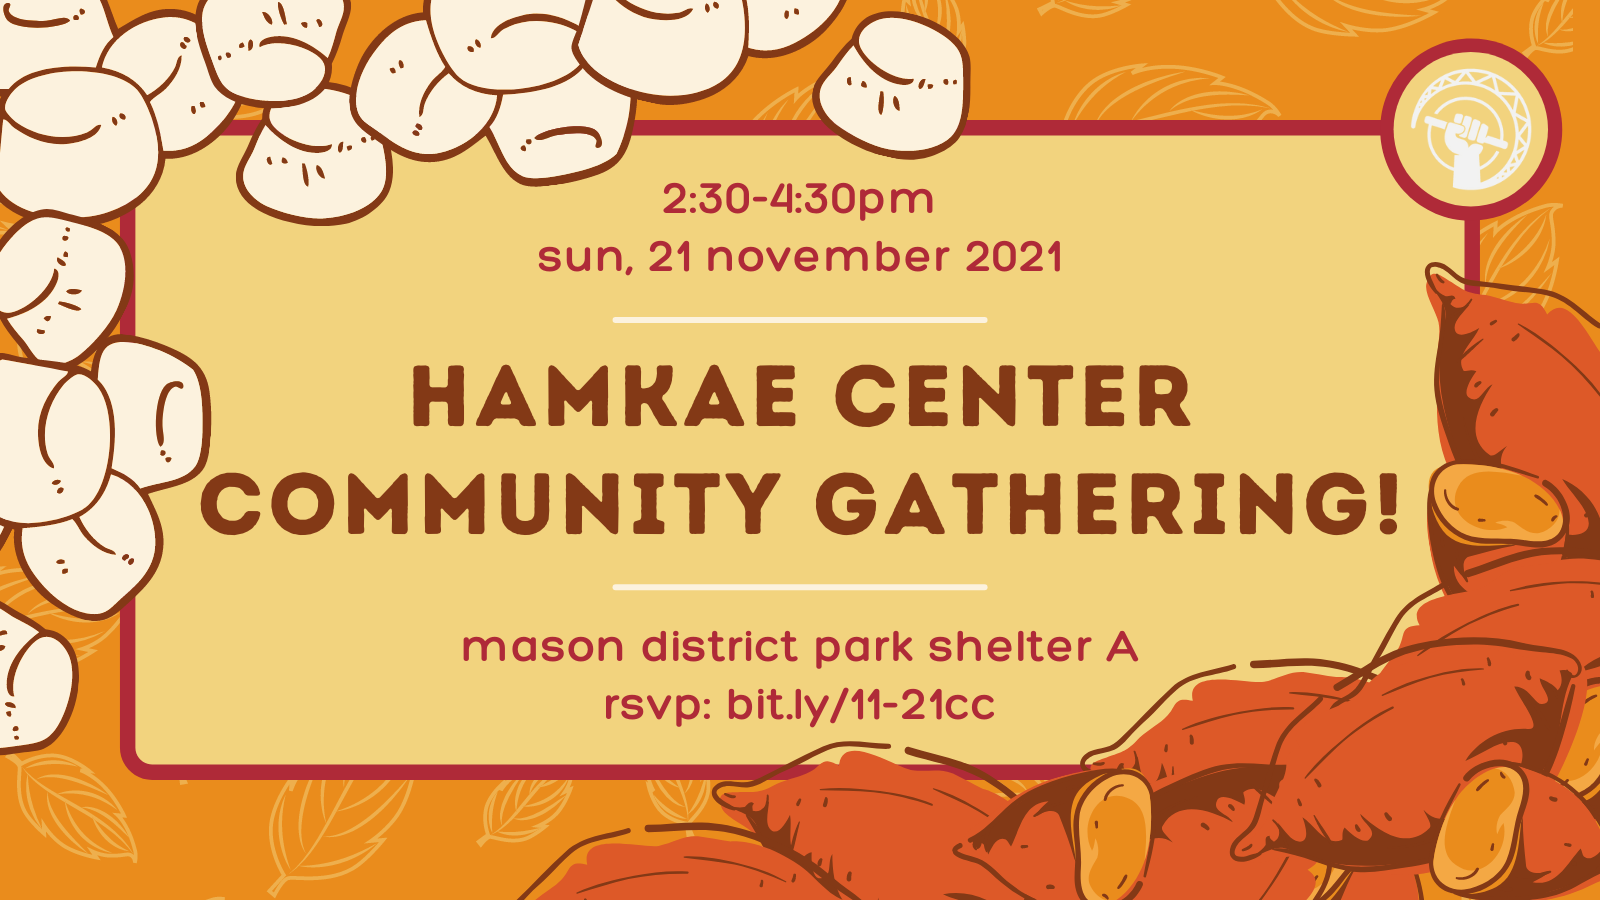 2:30-4:30pm on Sun, 21 November 2021. Hamkae Center Community Gathering! Mason District Park Shelter A. RSVP: bit.ly/11-21cc